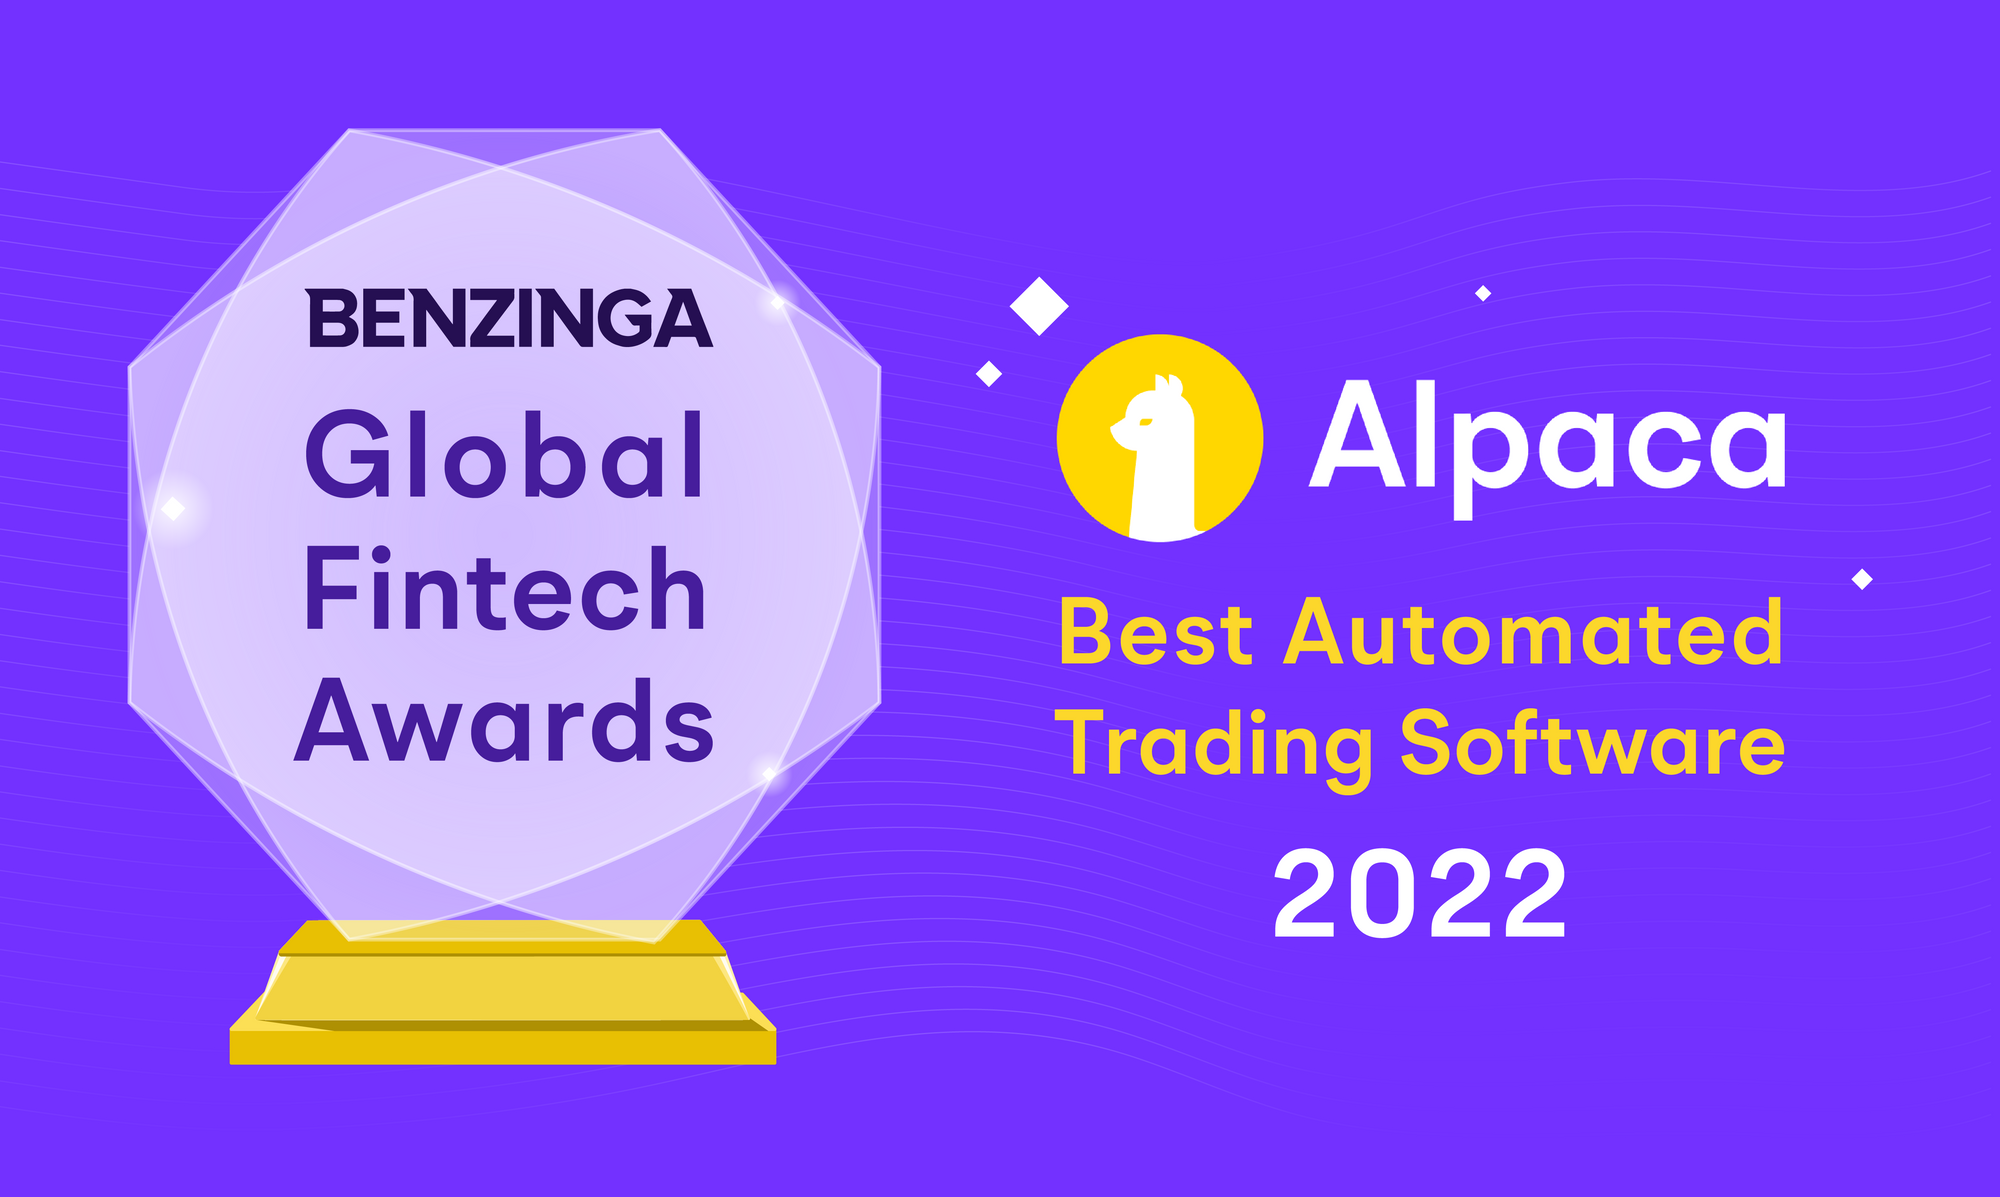 Alpaca Wins Best Automated Trading Software at 2022 Benzinga Fintech Awards